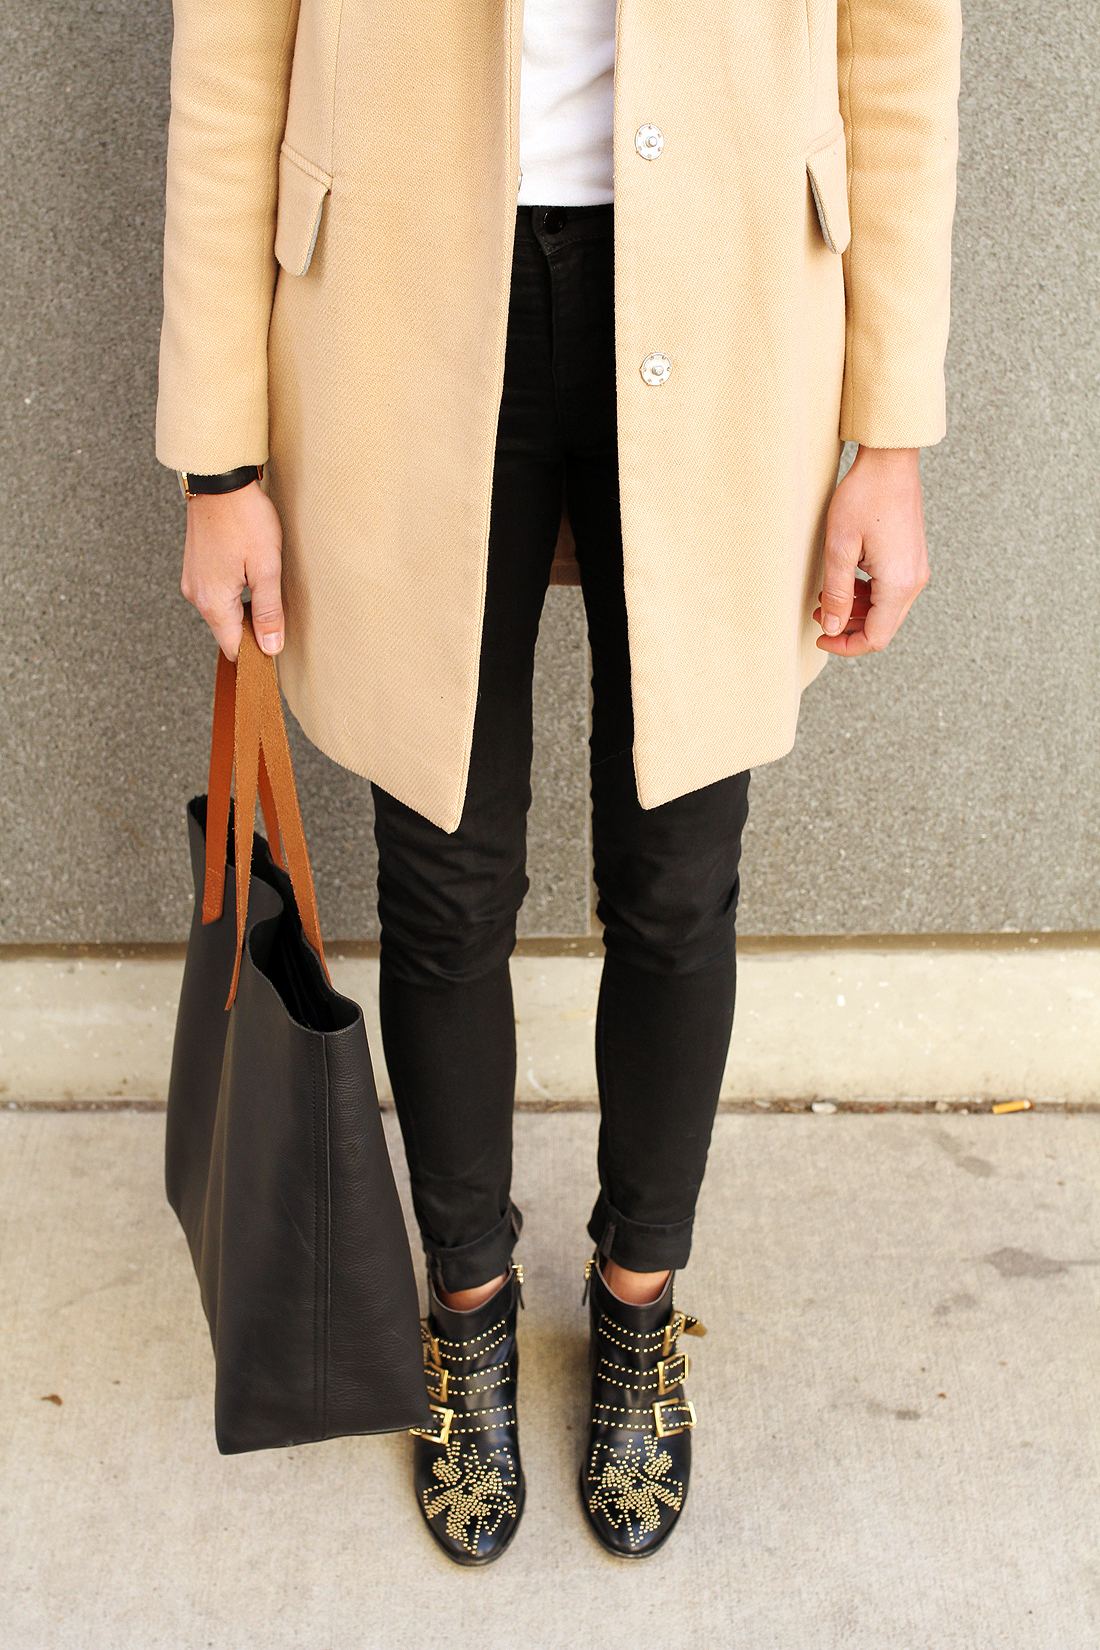 fashion-jackson-chloe-susanna-booties-madewell-transport-tote-black-skinny-jeans-camel-coat